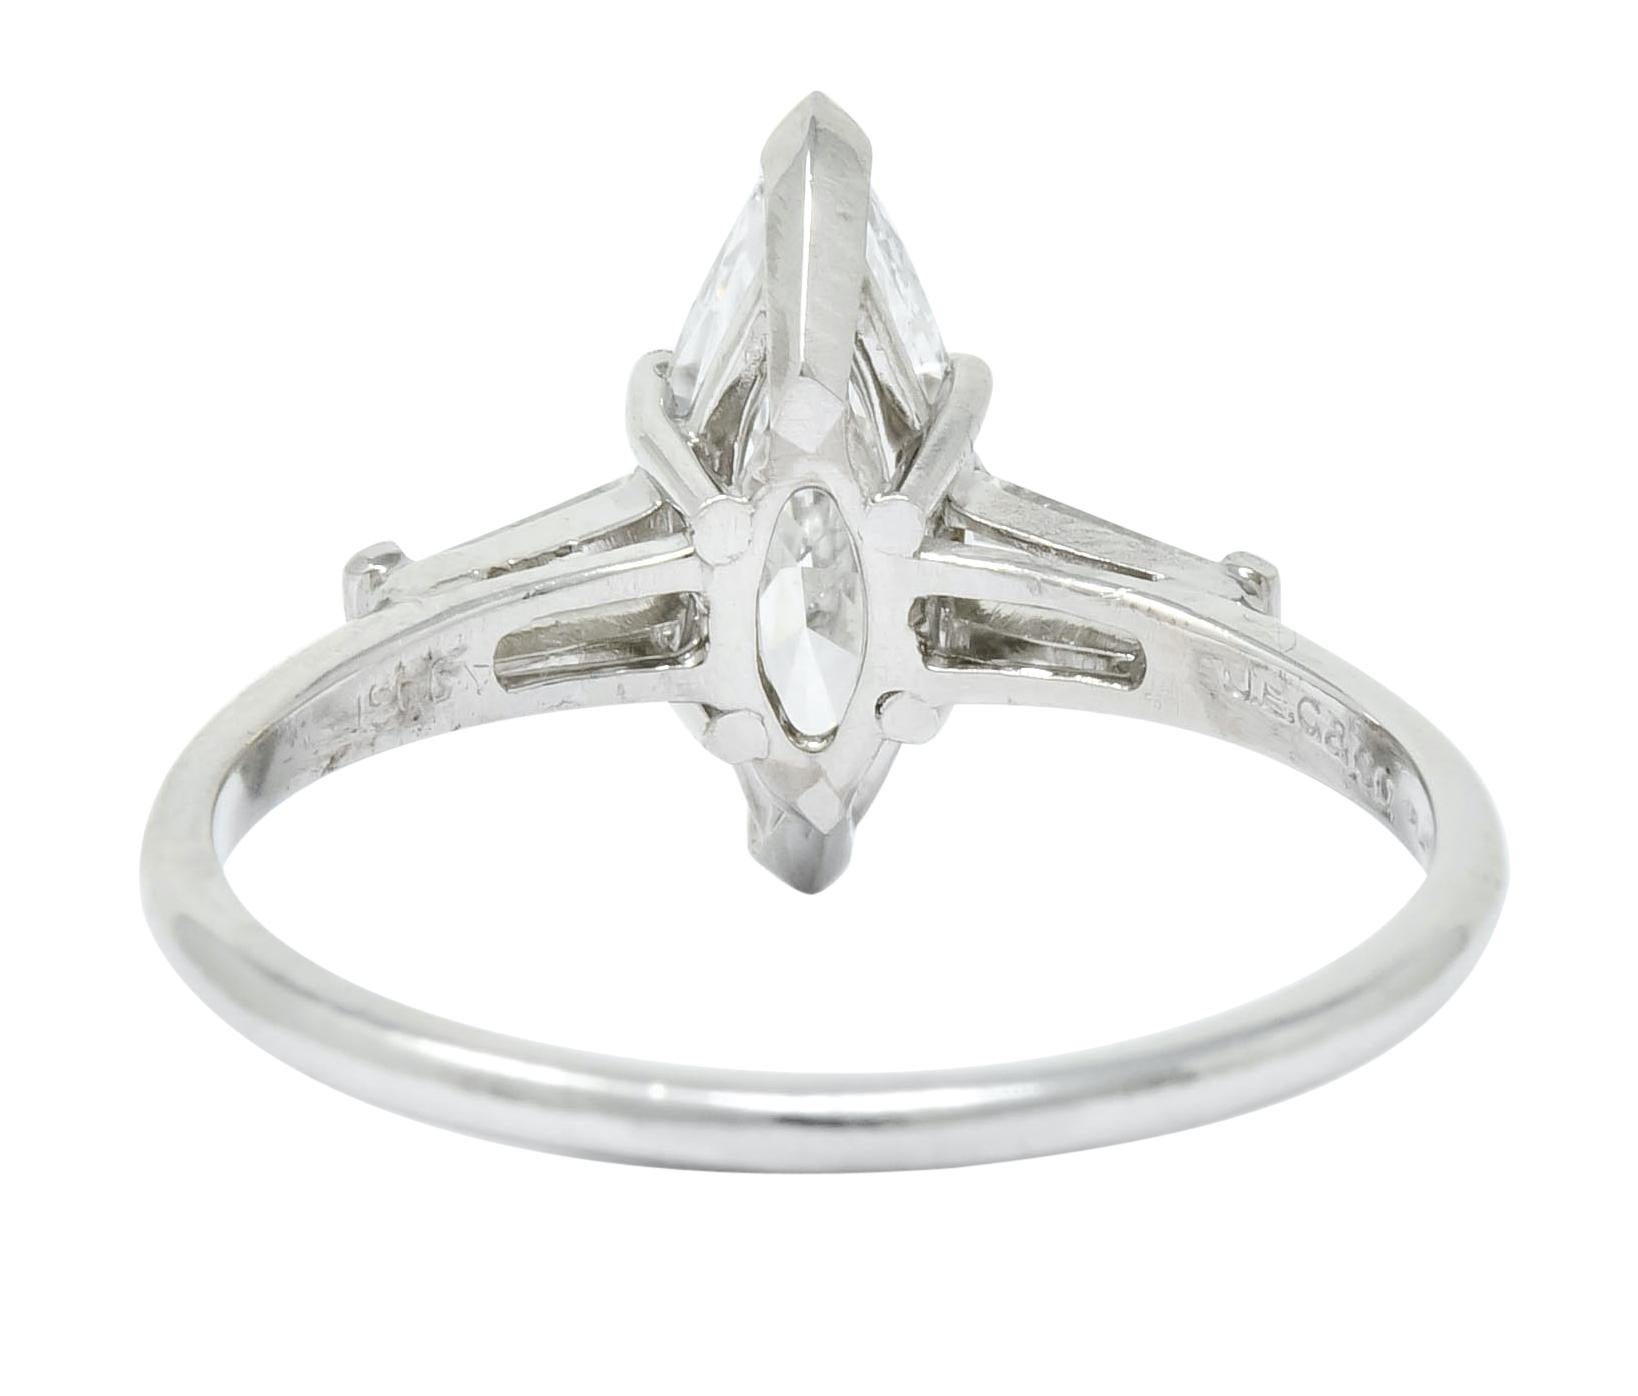 Contemporary J.E. Caldwell 1.03 Carat Marquise Diamond Platinum Engagement Ring GIA